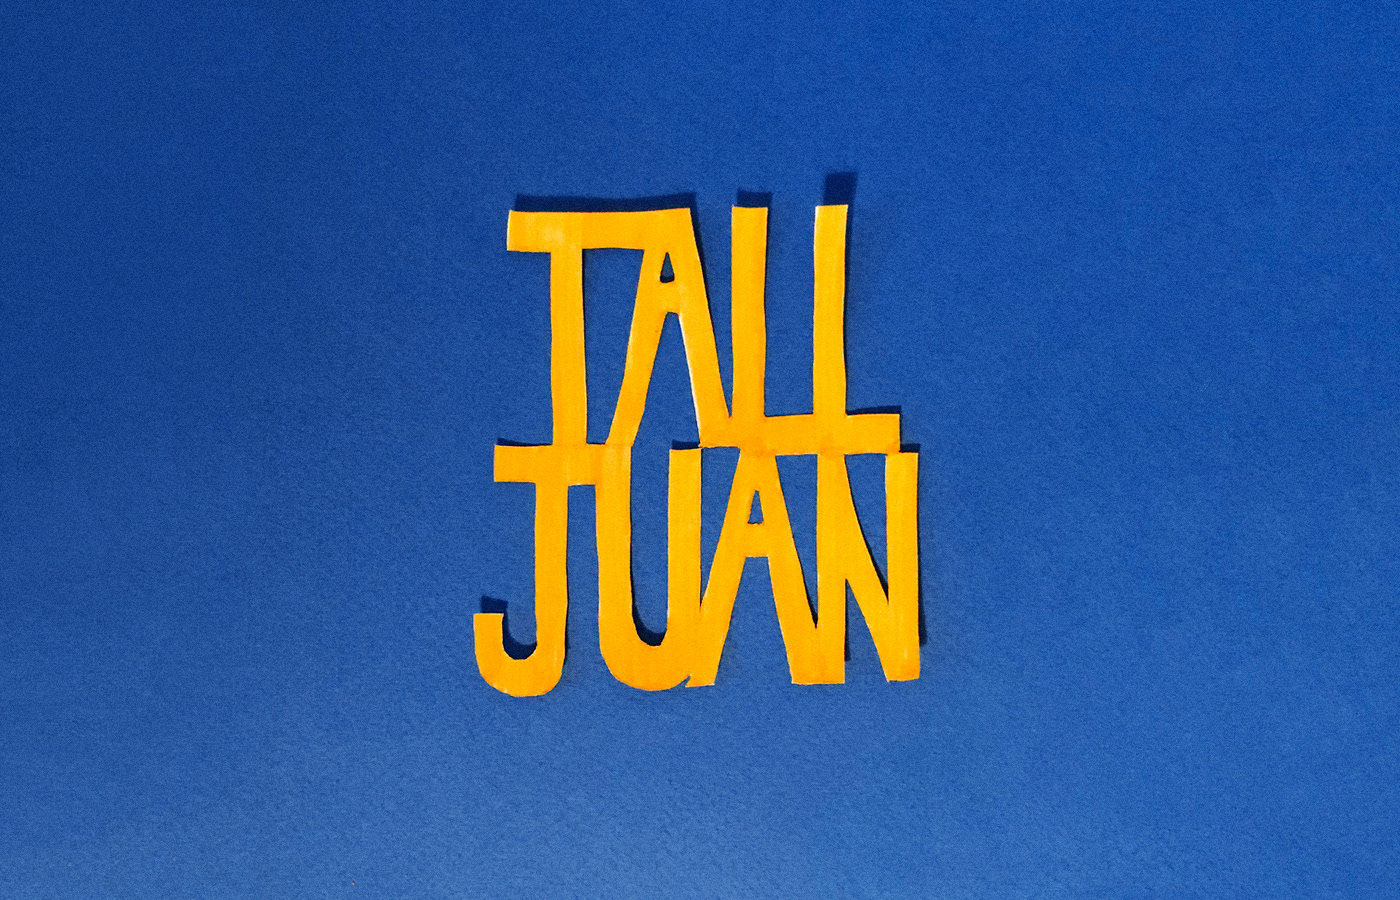 album cover artwork atlantico collage colorful geometry latino mixed media portrait tall juan